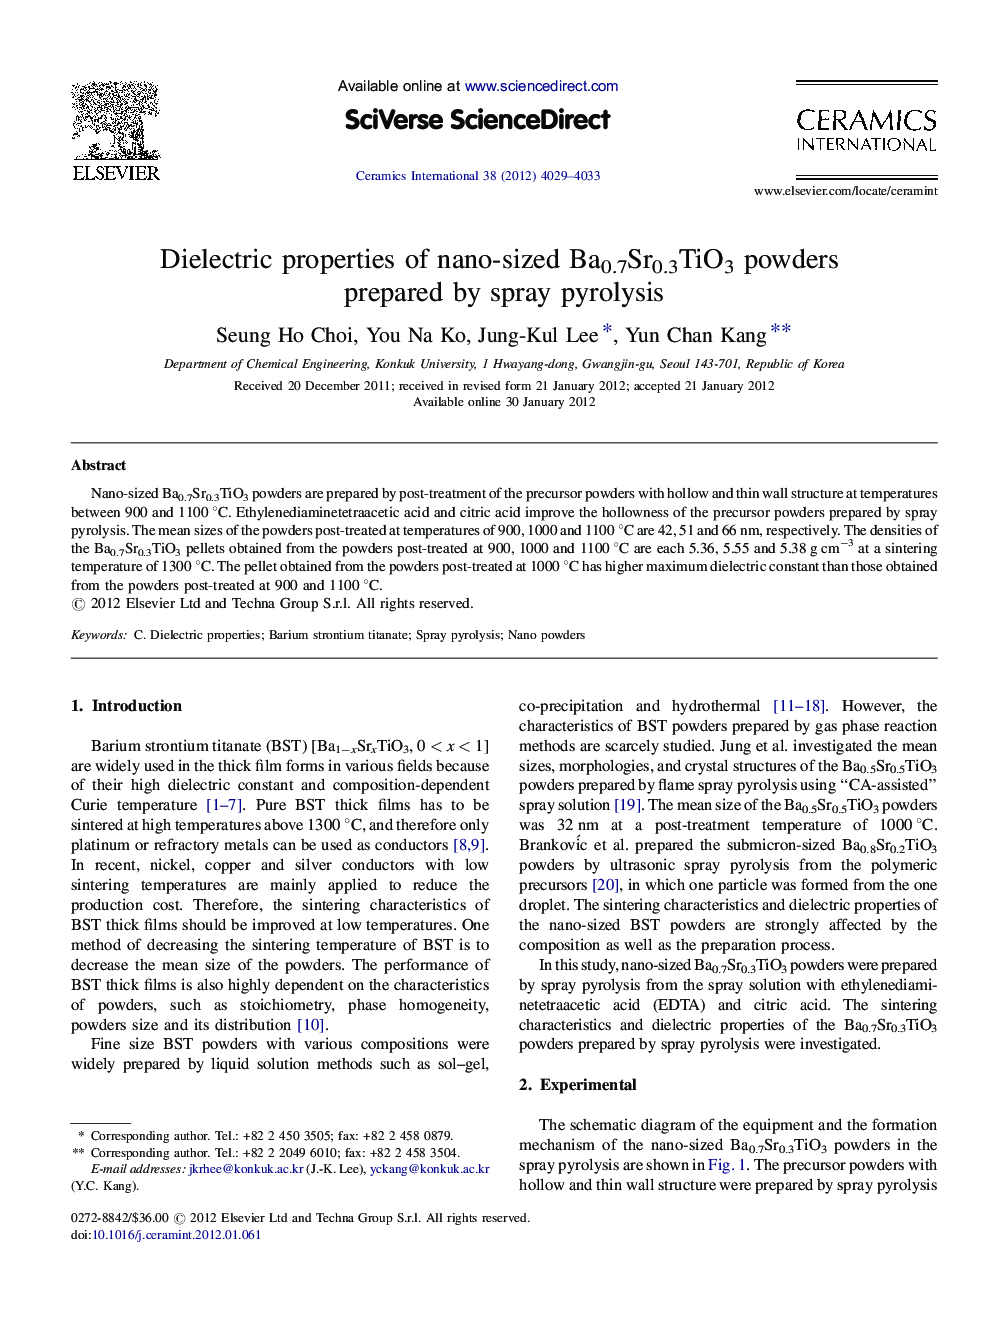 Dielectric properties of nano-sized Ba0.7Sr0.3TiO3 powders prepared by spray pyrolysis